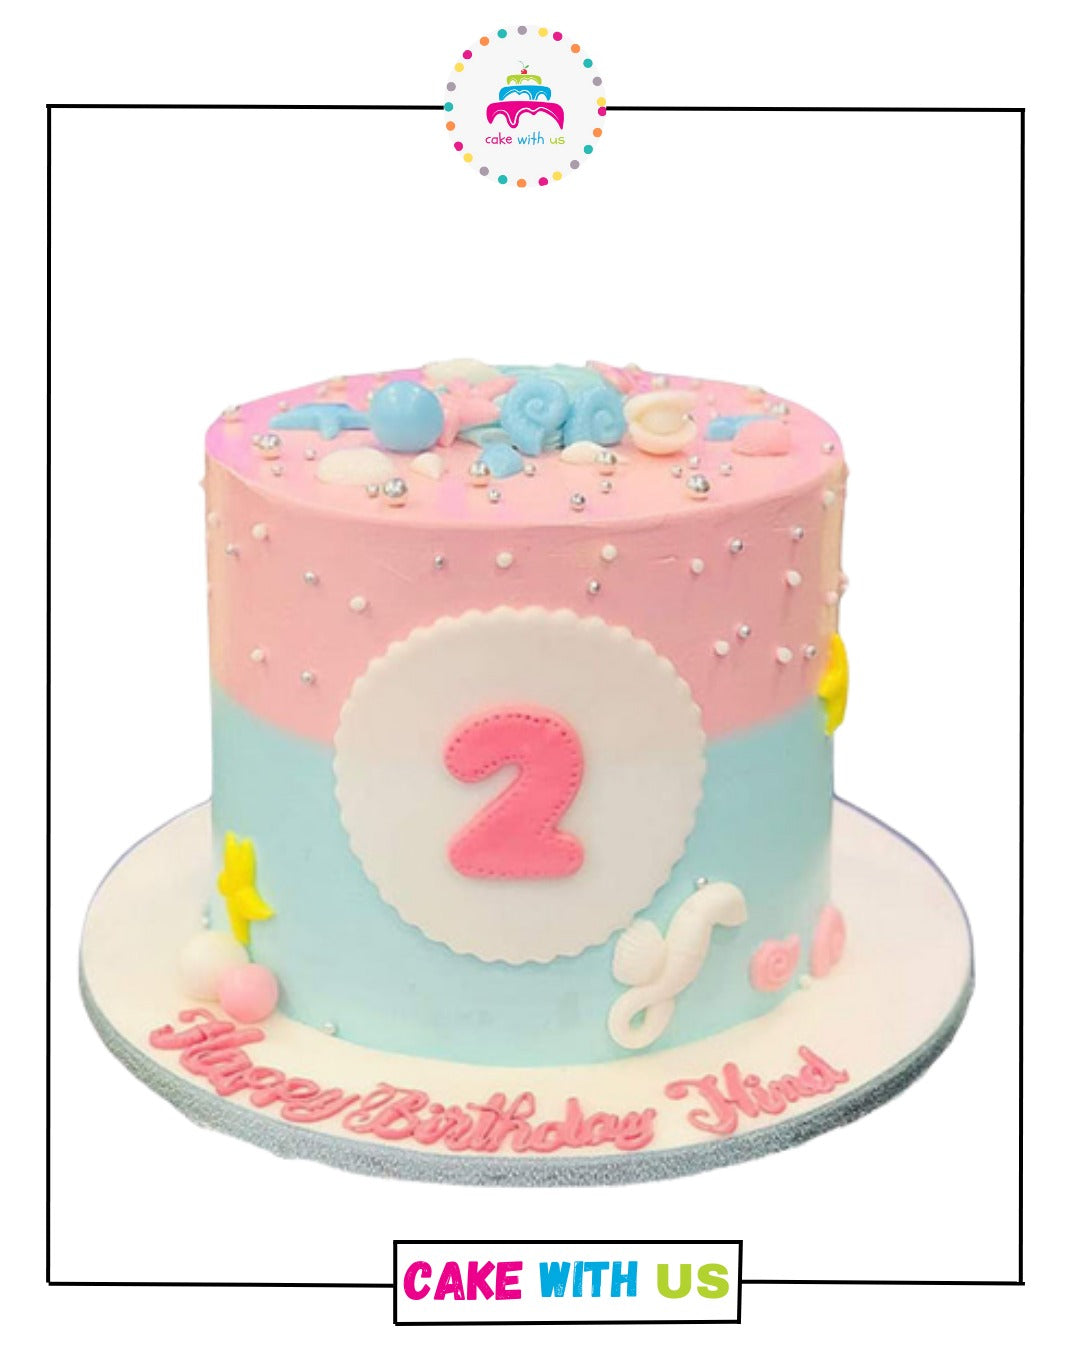 birthday cake for baby girl 2 years